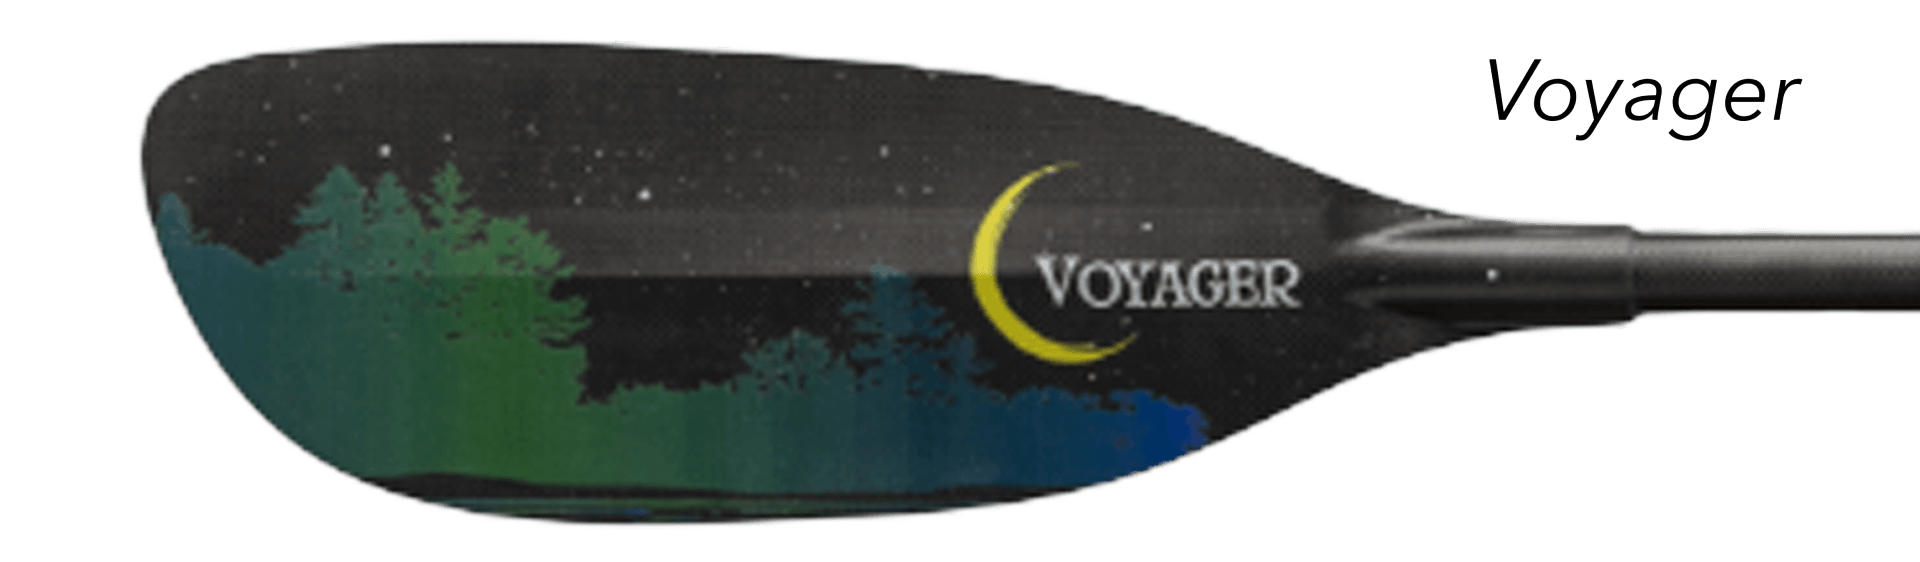 lendal voyager paddle